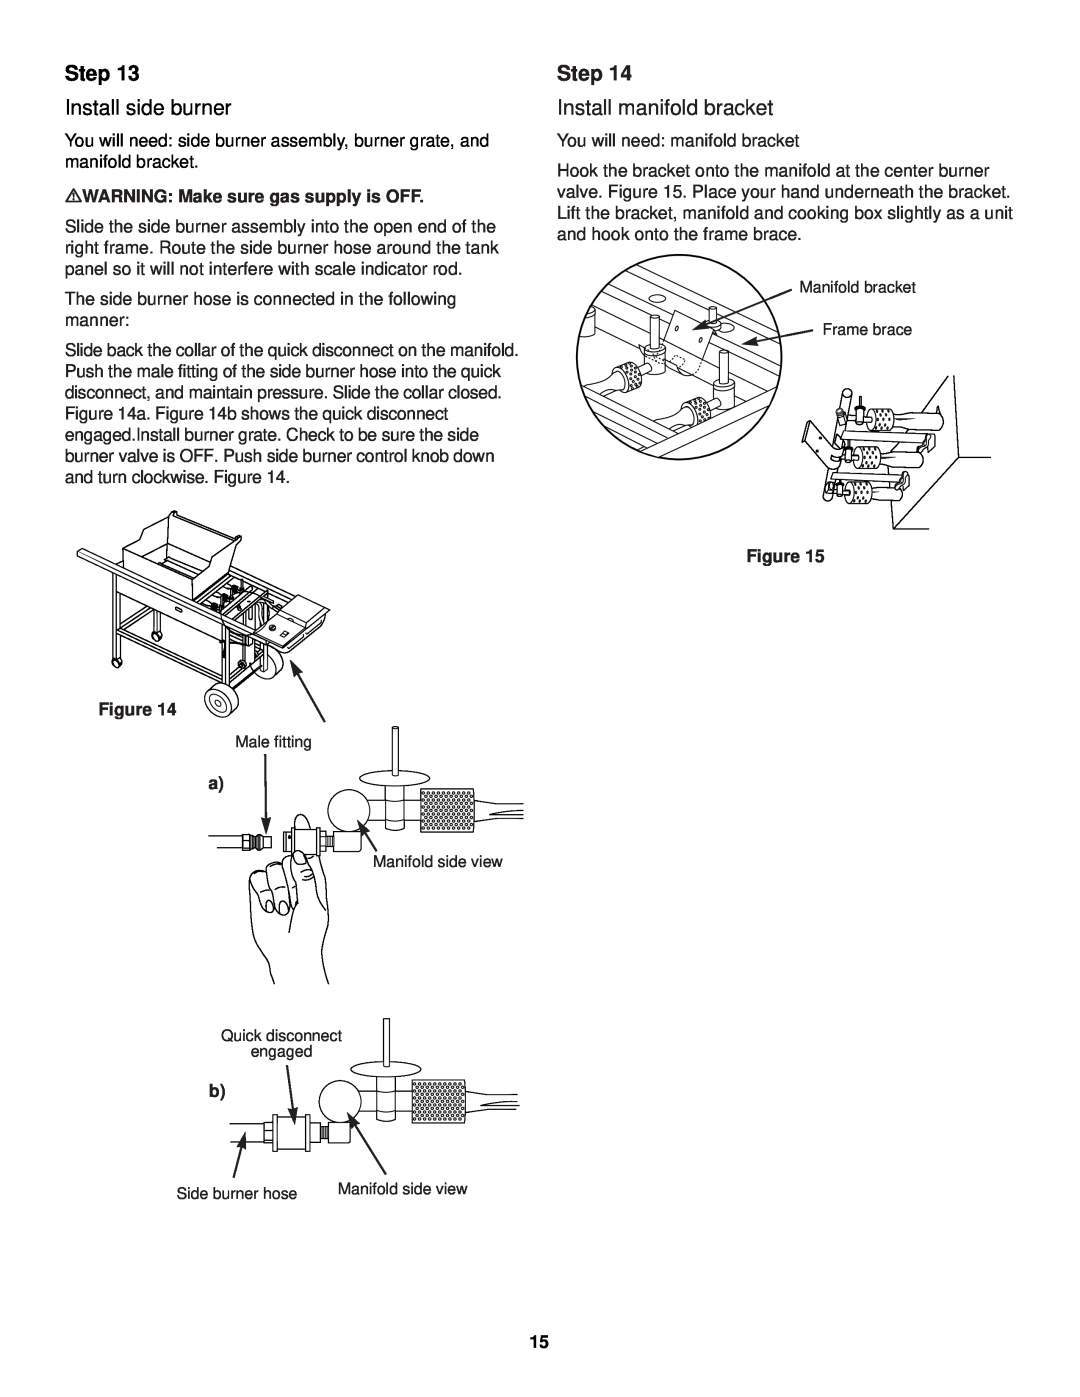 Weber 98642 Step, Install side burner, Install manifold bracket, mWARNING Make sure gas supply is OFF, Figure Figure 